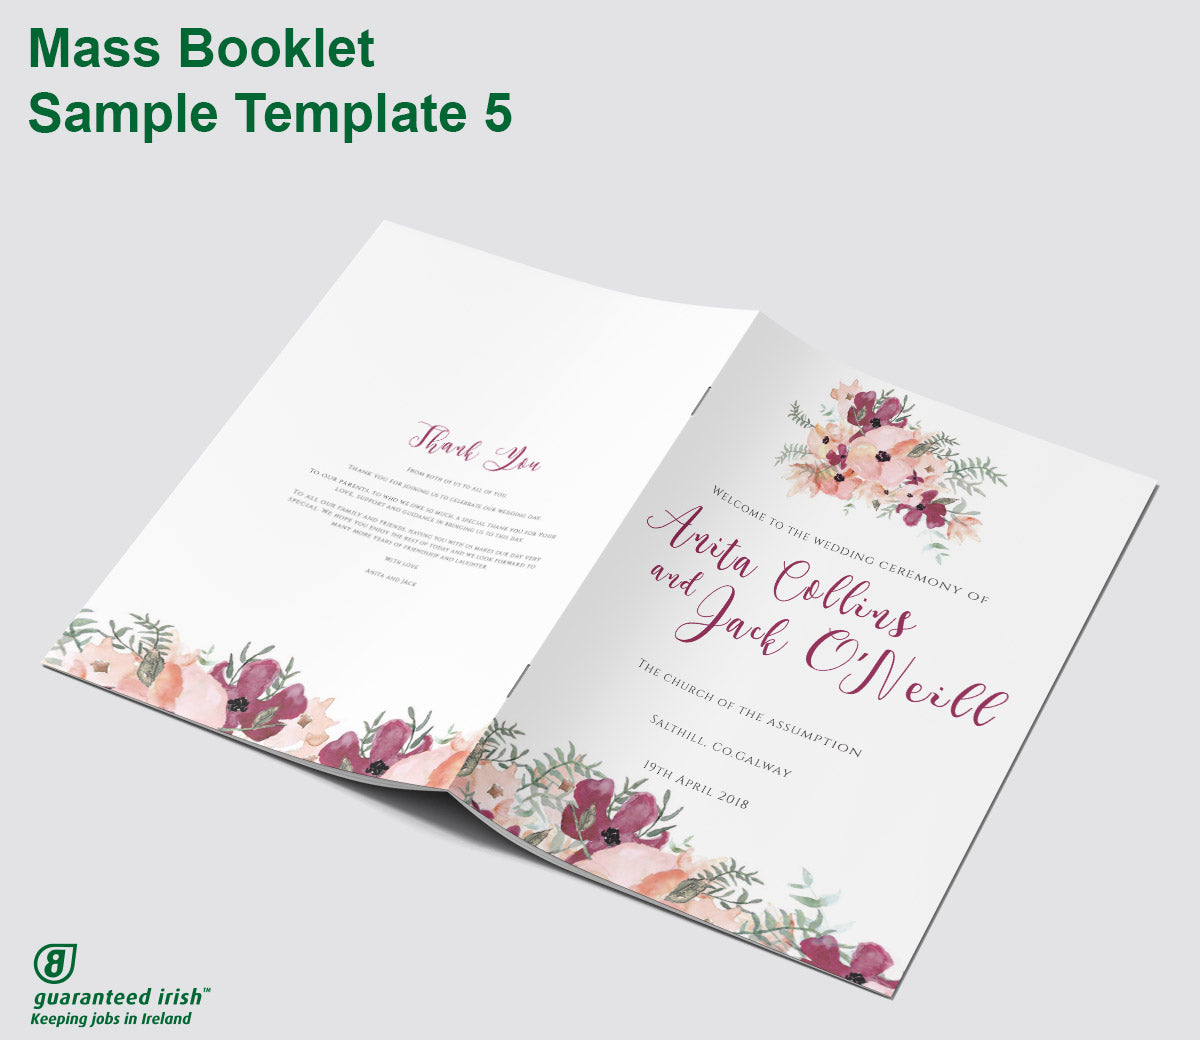 Wedding Mass Booklets - Sample 5